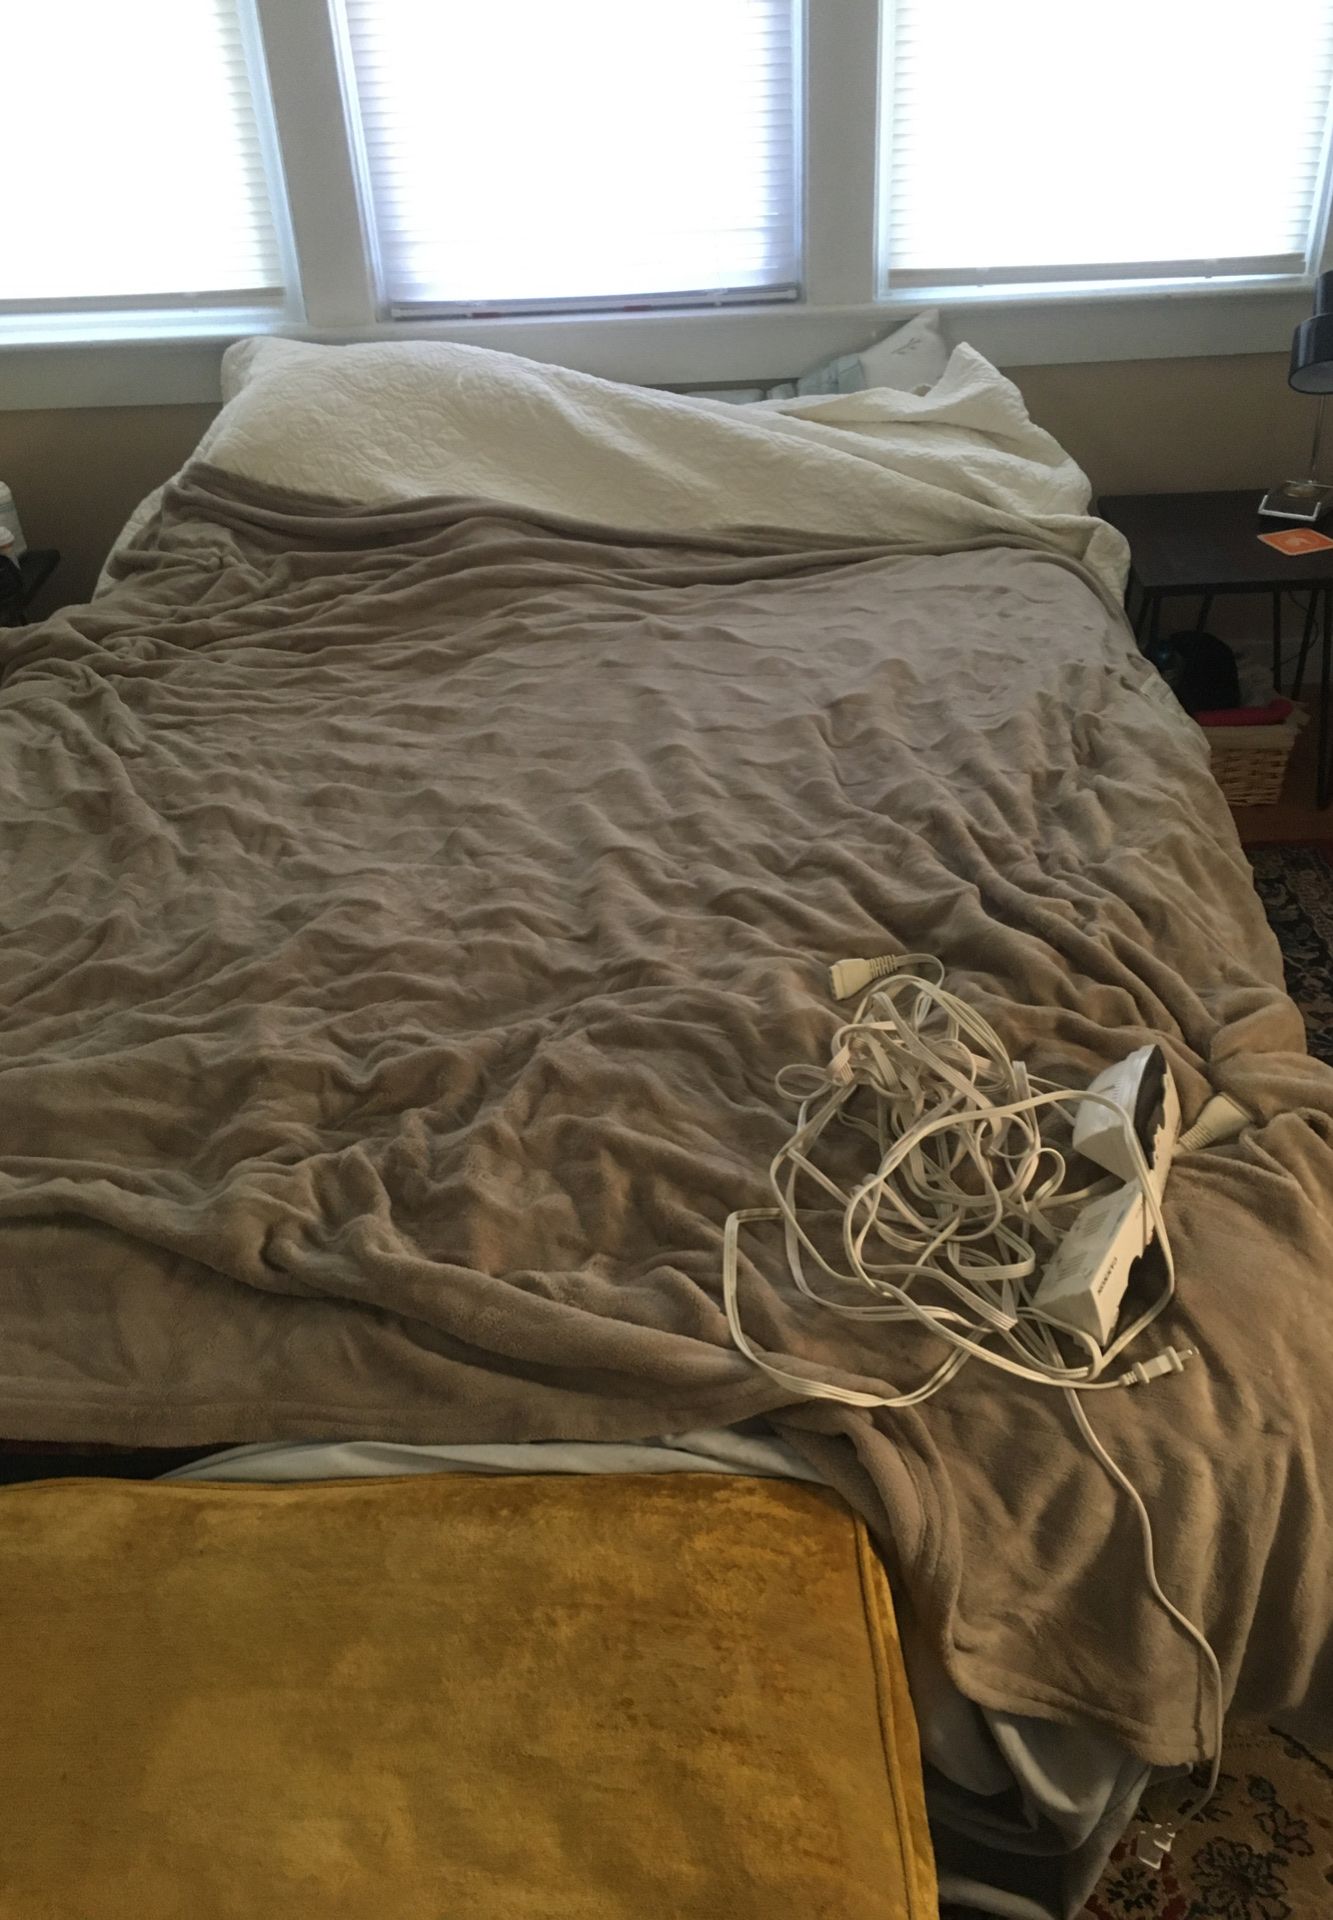 Queen sized electric blanket in grey